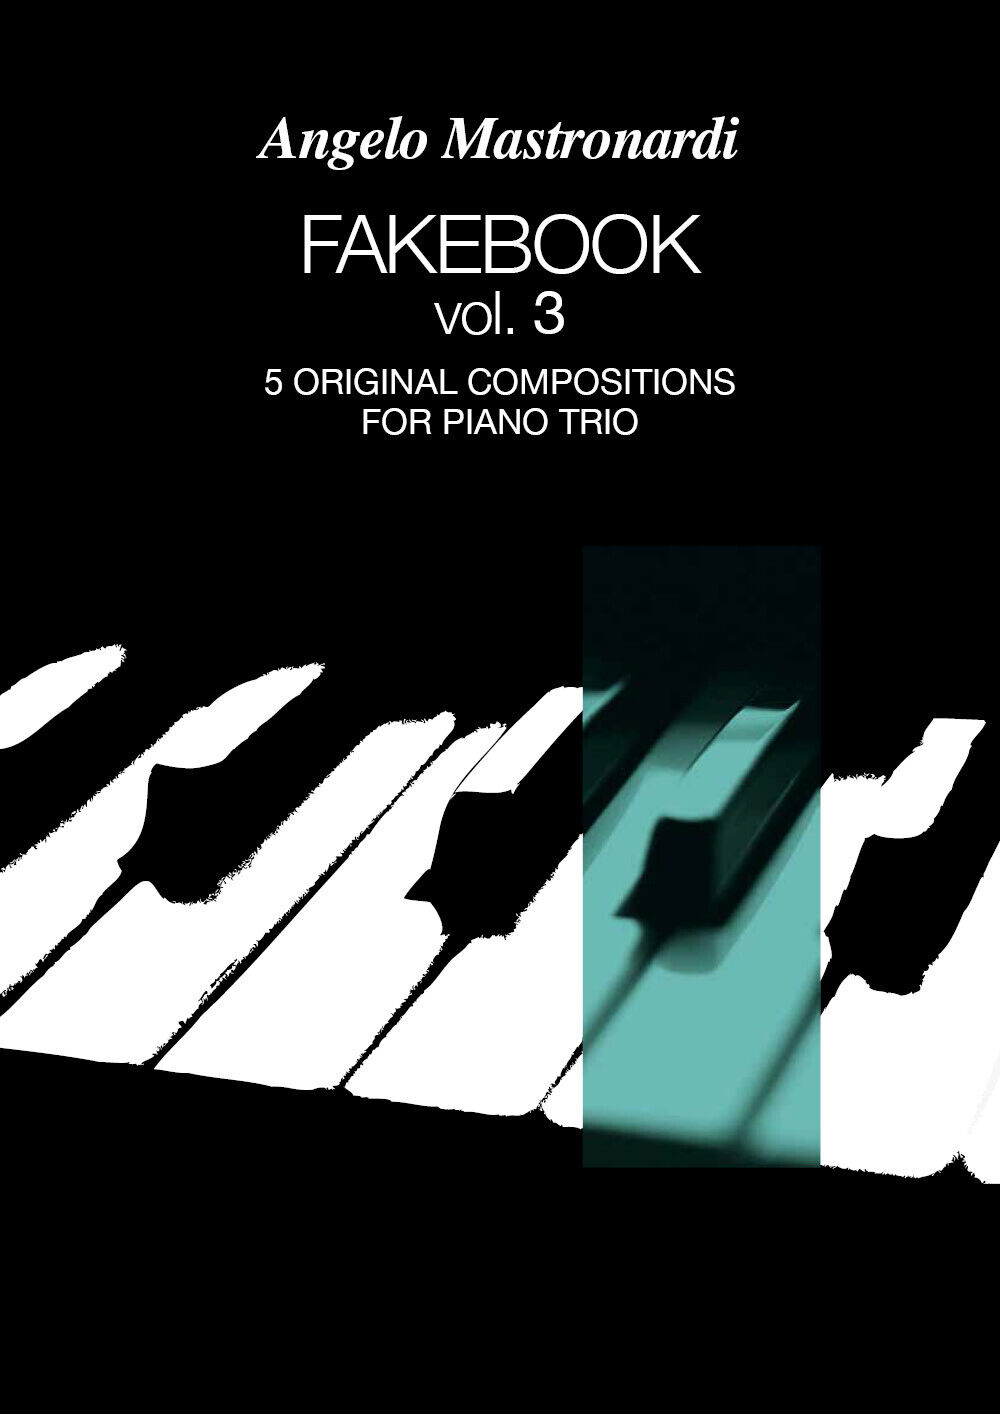 Fakebook Vol. 3. 5 original compositions for piano trio di Angelo Mastronardi,   libro usato